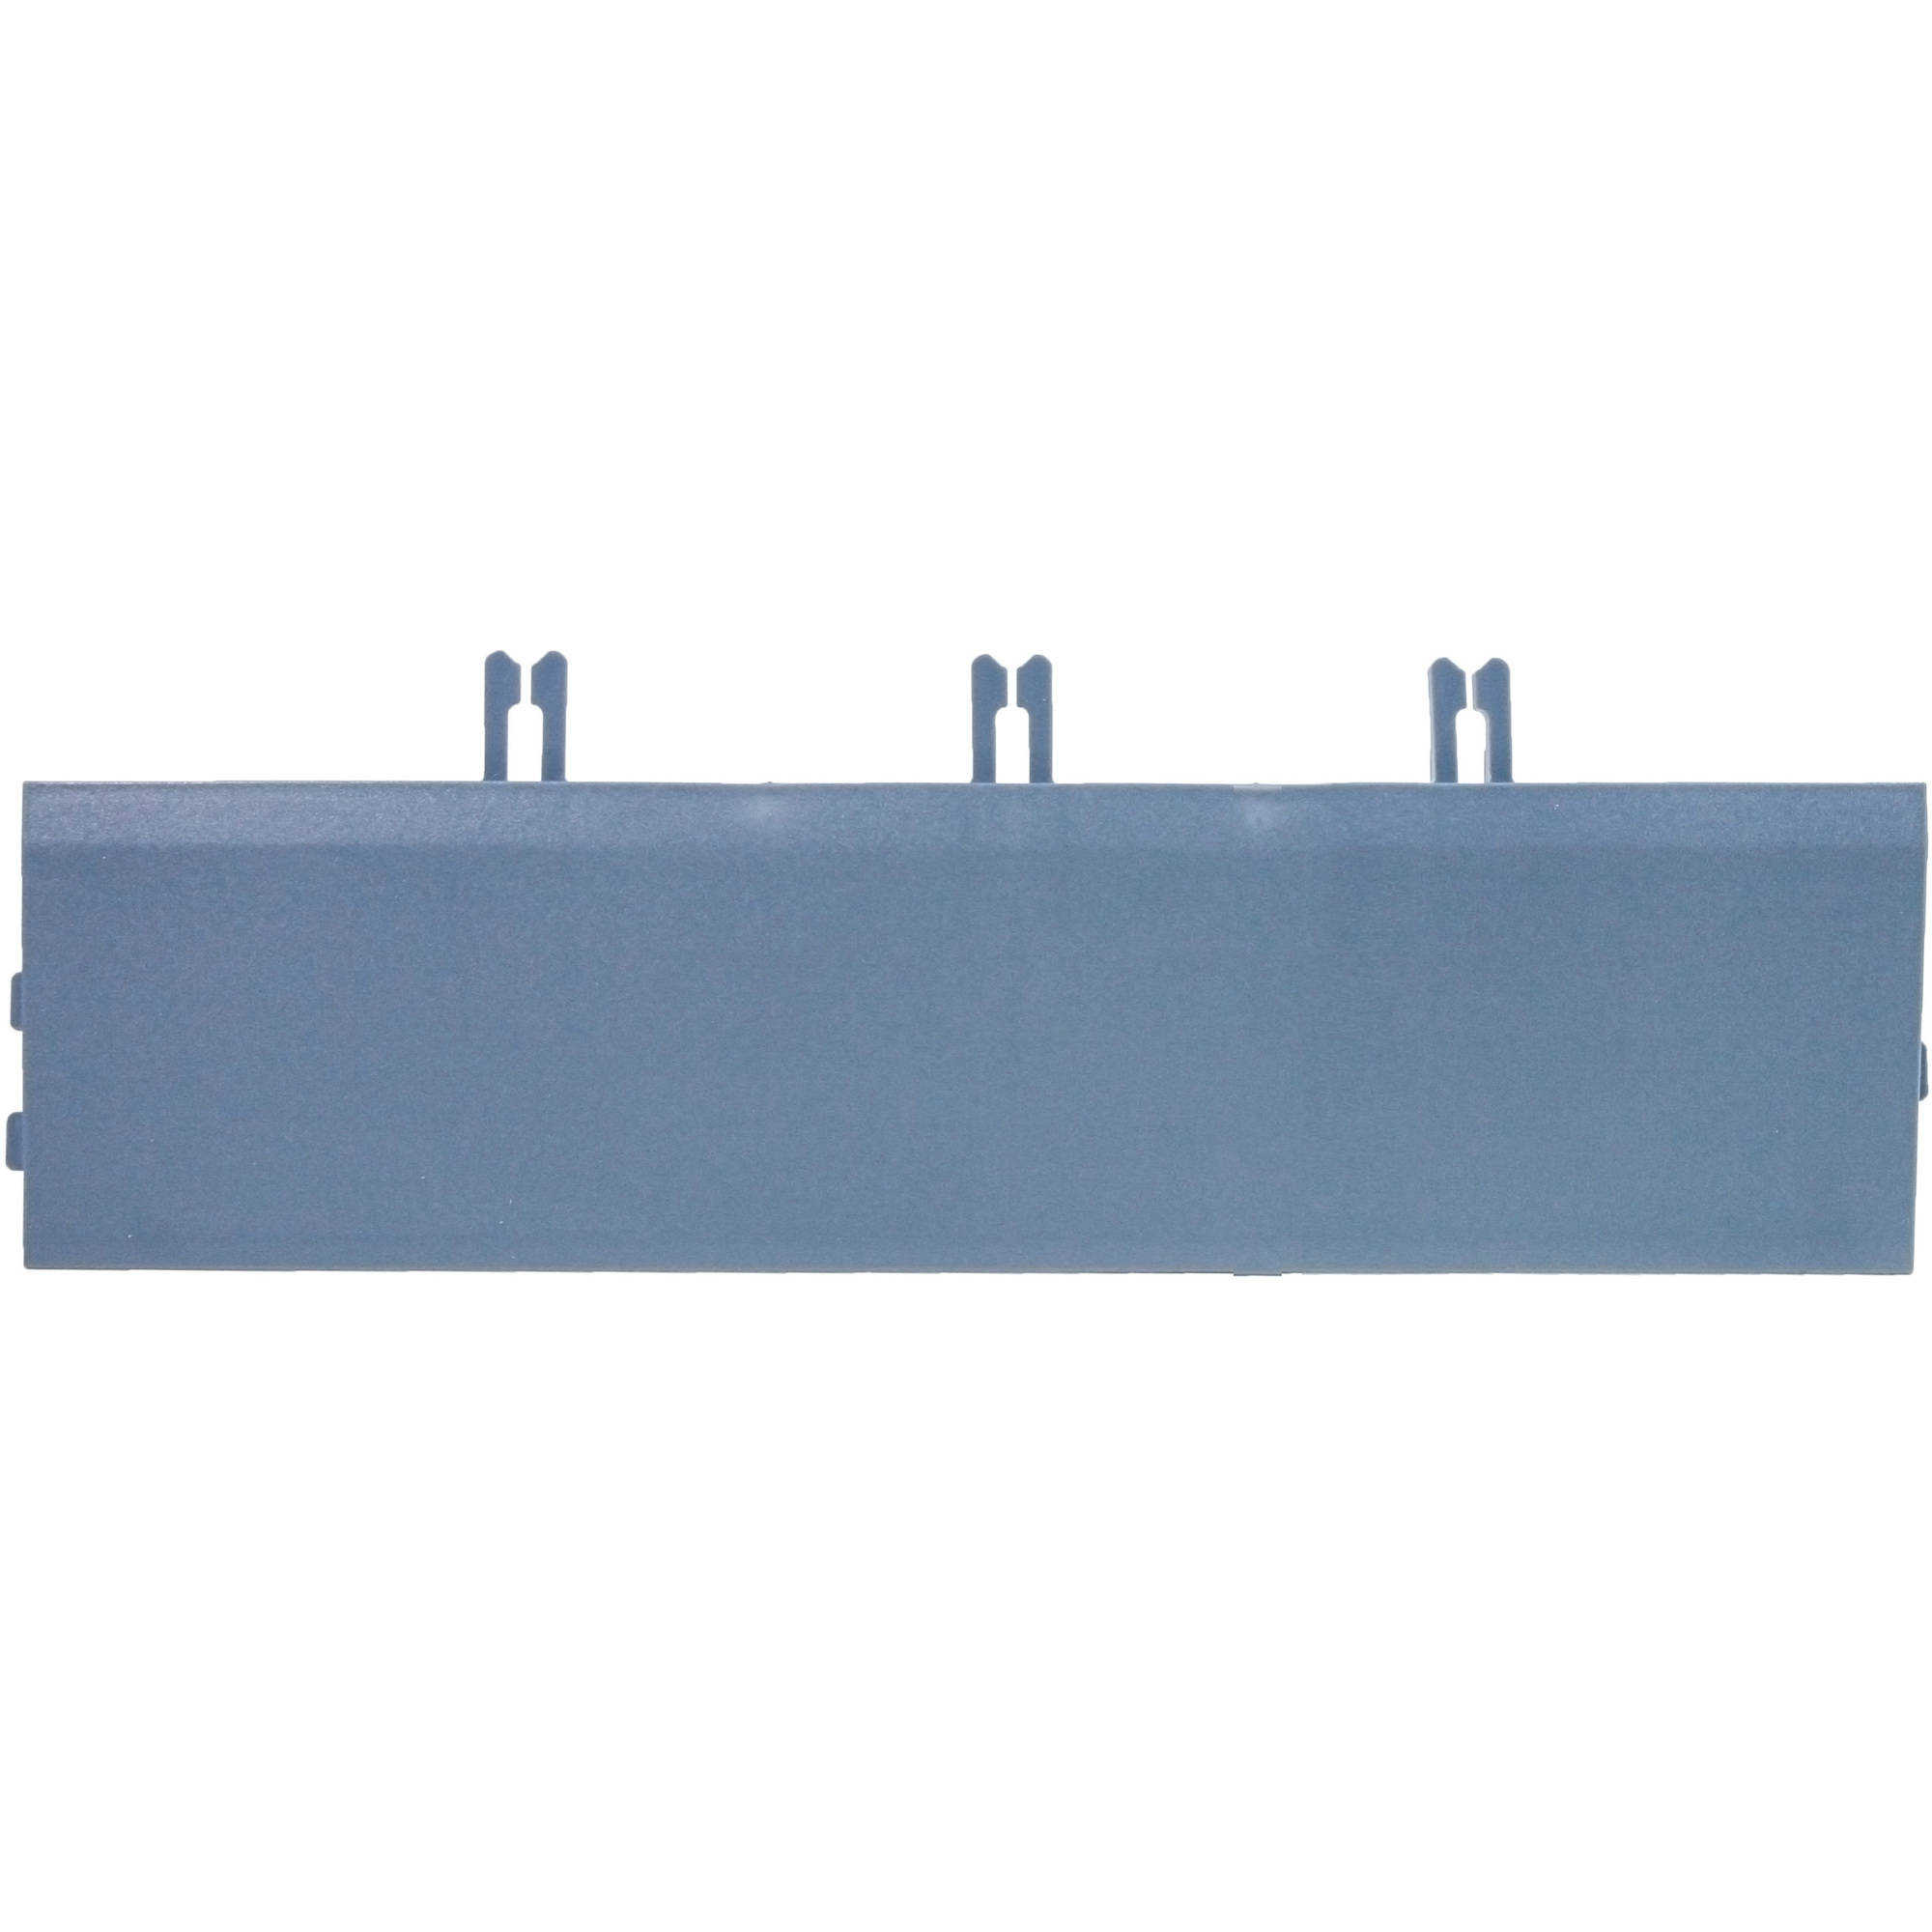 Armadillo Tile Bevels, 12', Steel Blue, 4 per Pack